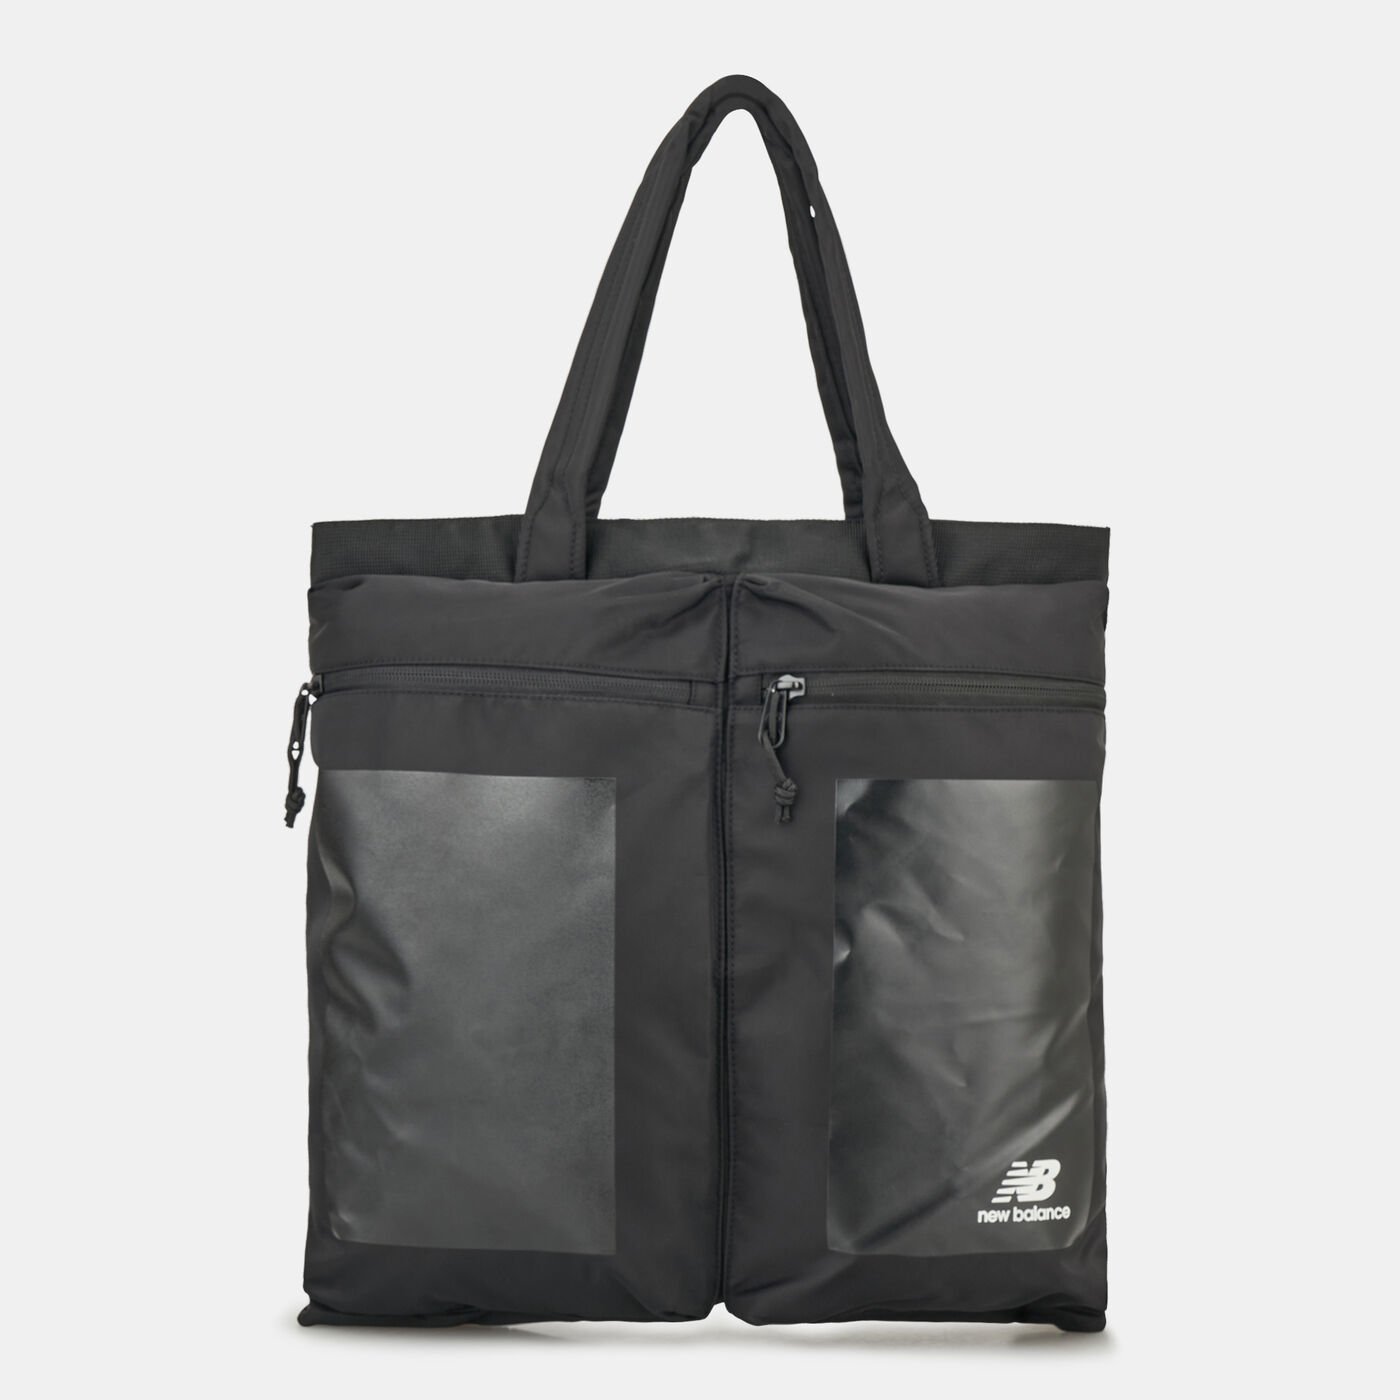 Dual Pockets Tote Bag